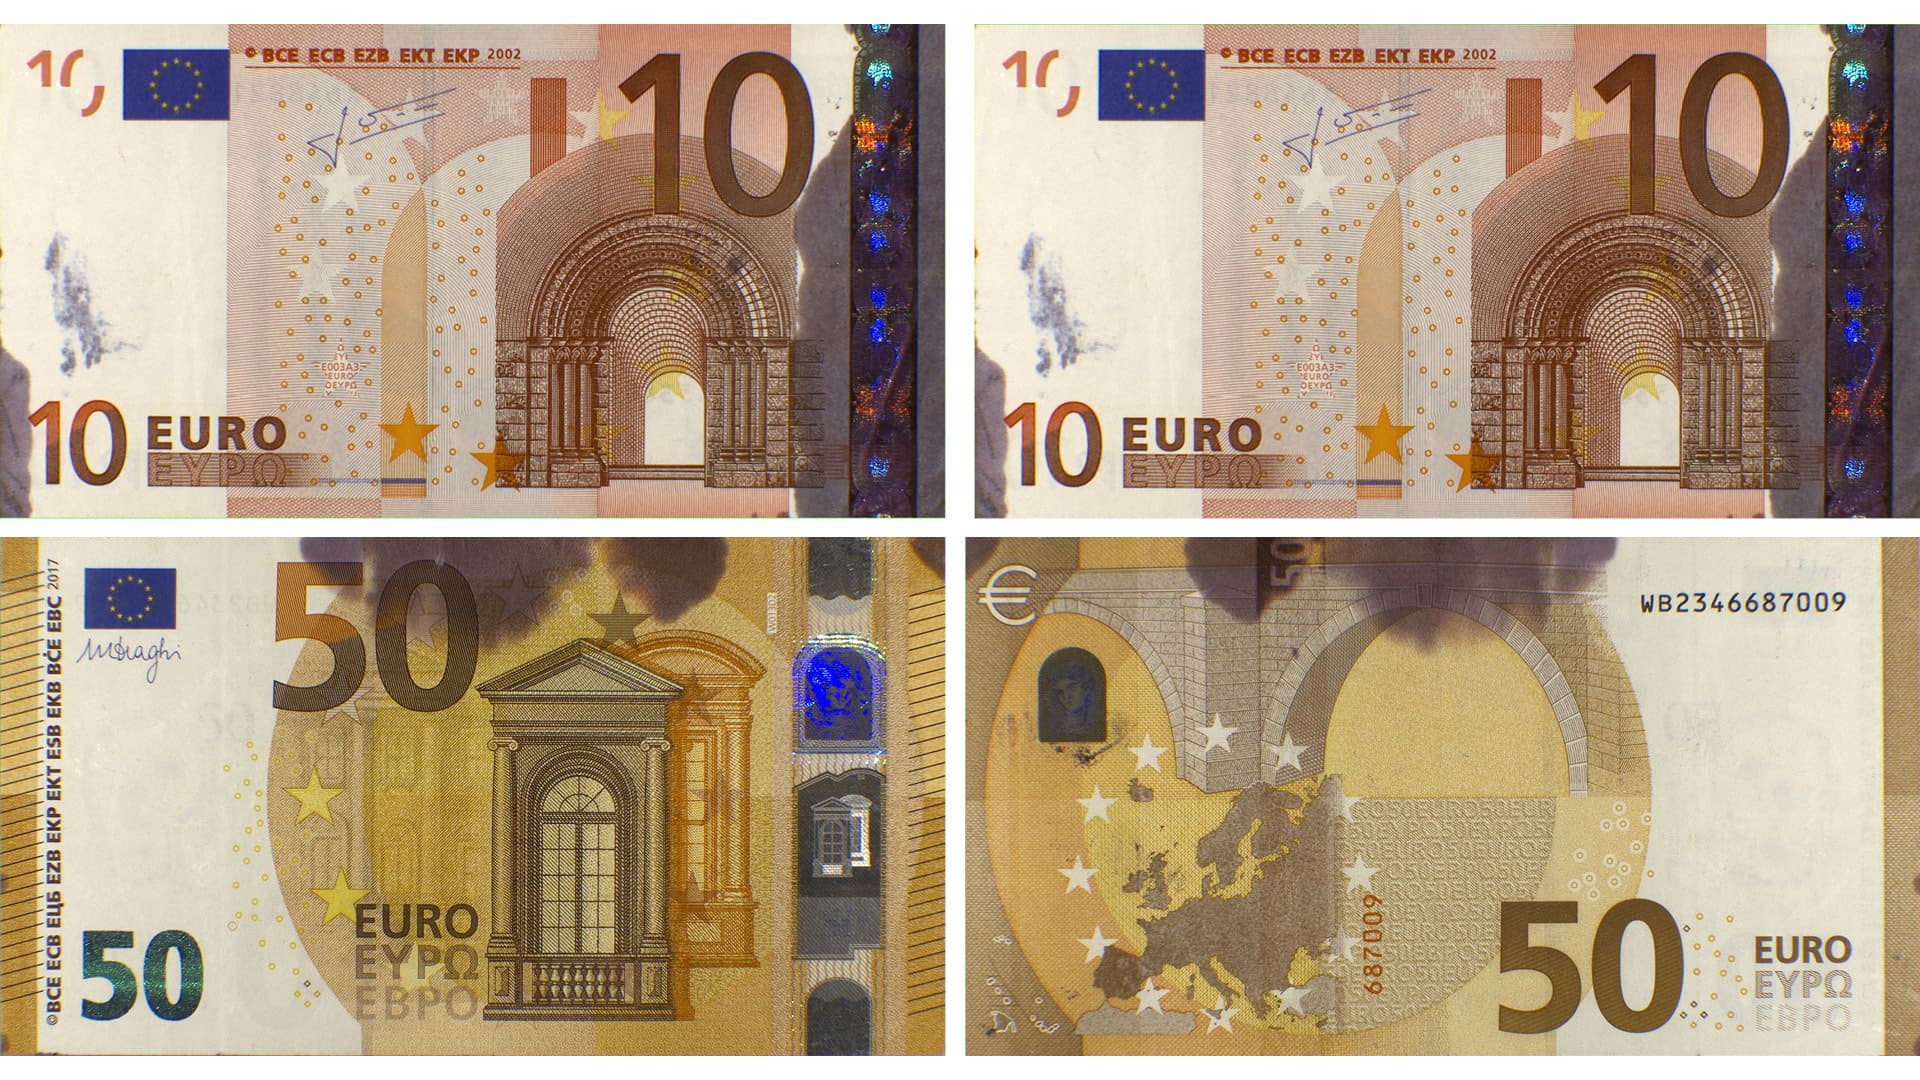 10 euro bill